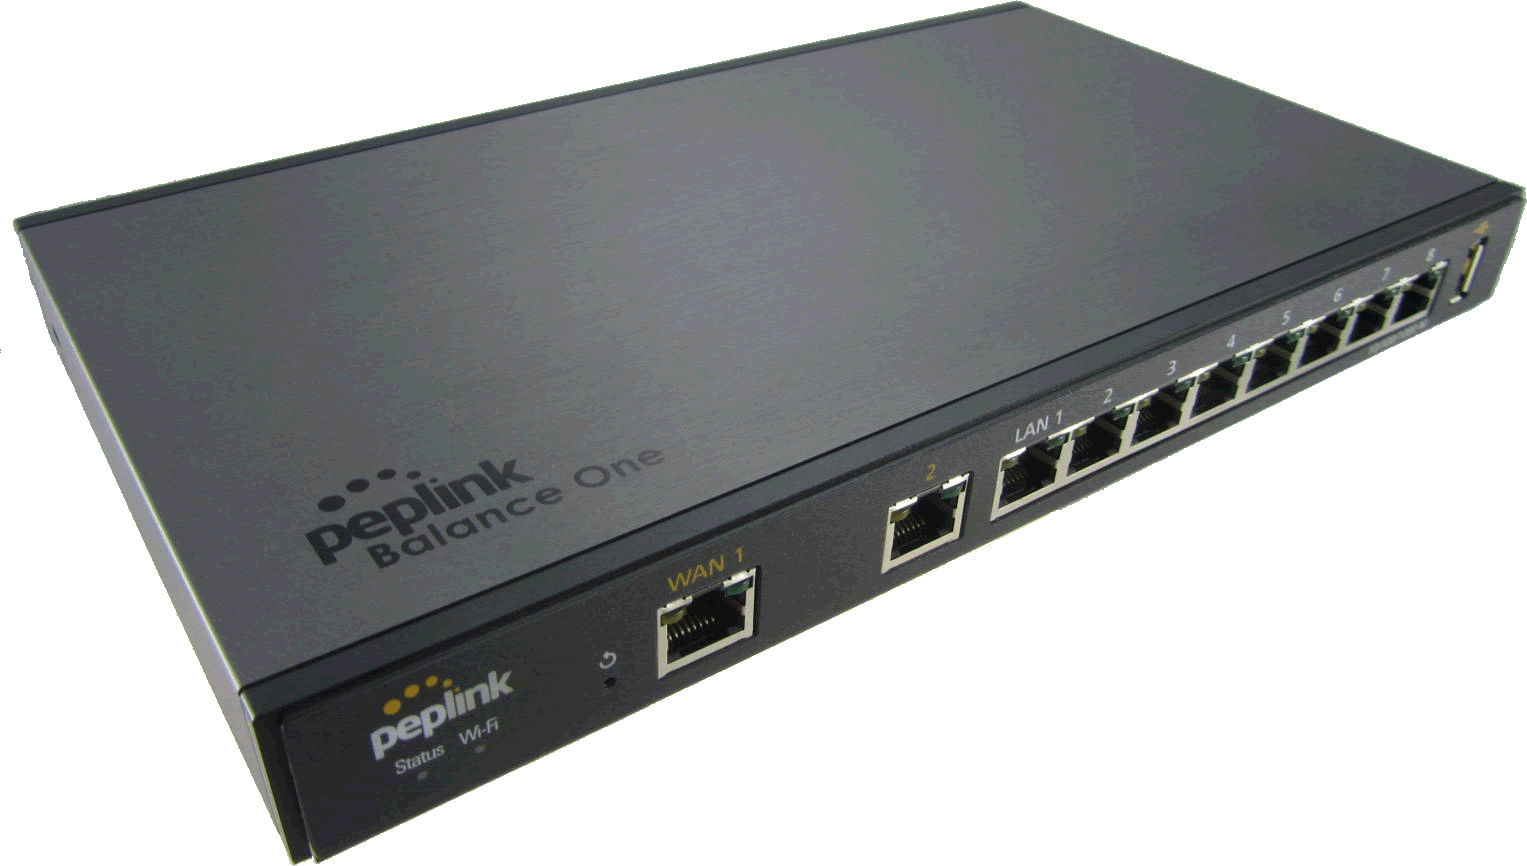  Routeurs Firewall SdWan Multiwan 600Mb Balance OneCore : routeur firewall 2 WAN, 600Mb, 50 users